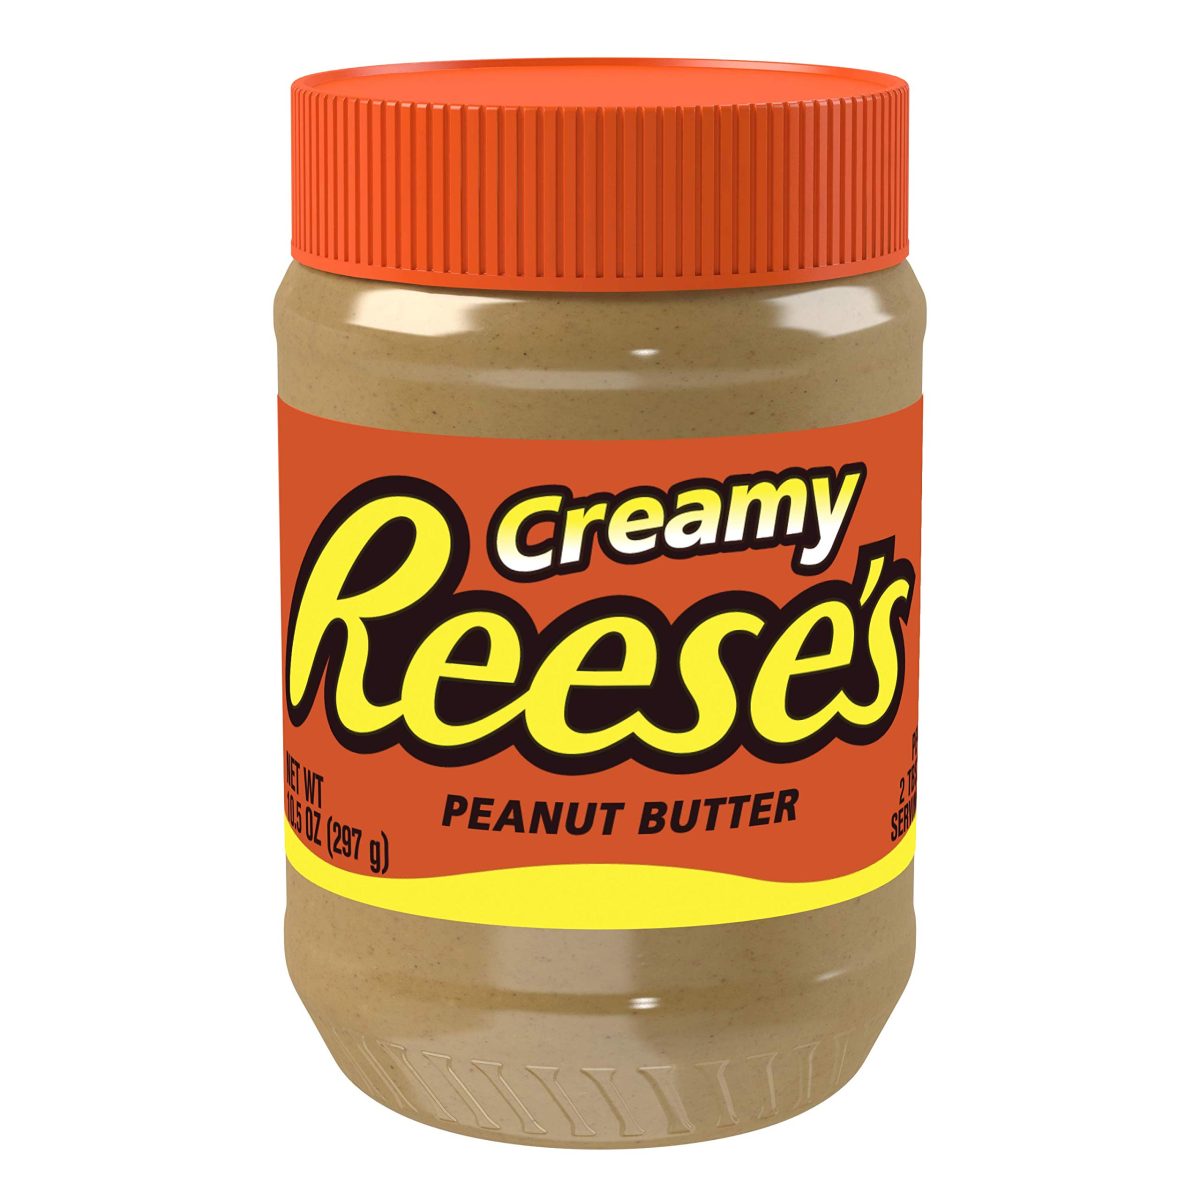 Reese's Creamy Peanut butter